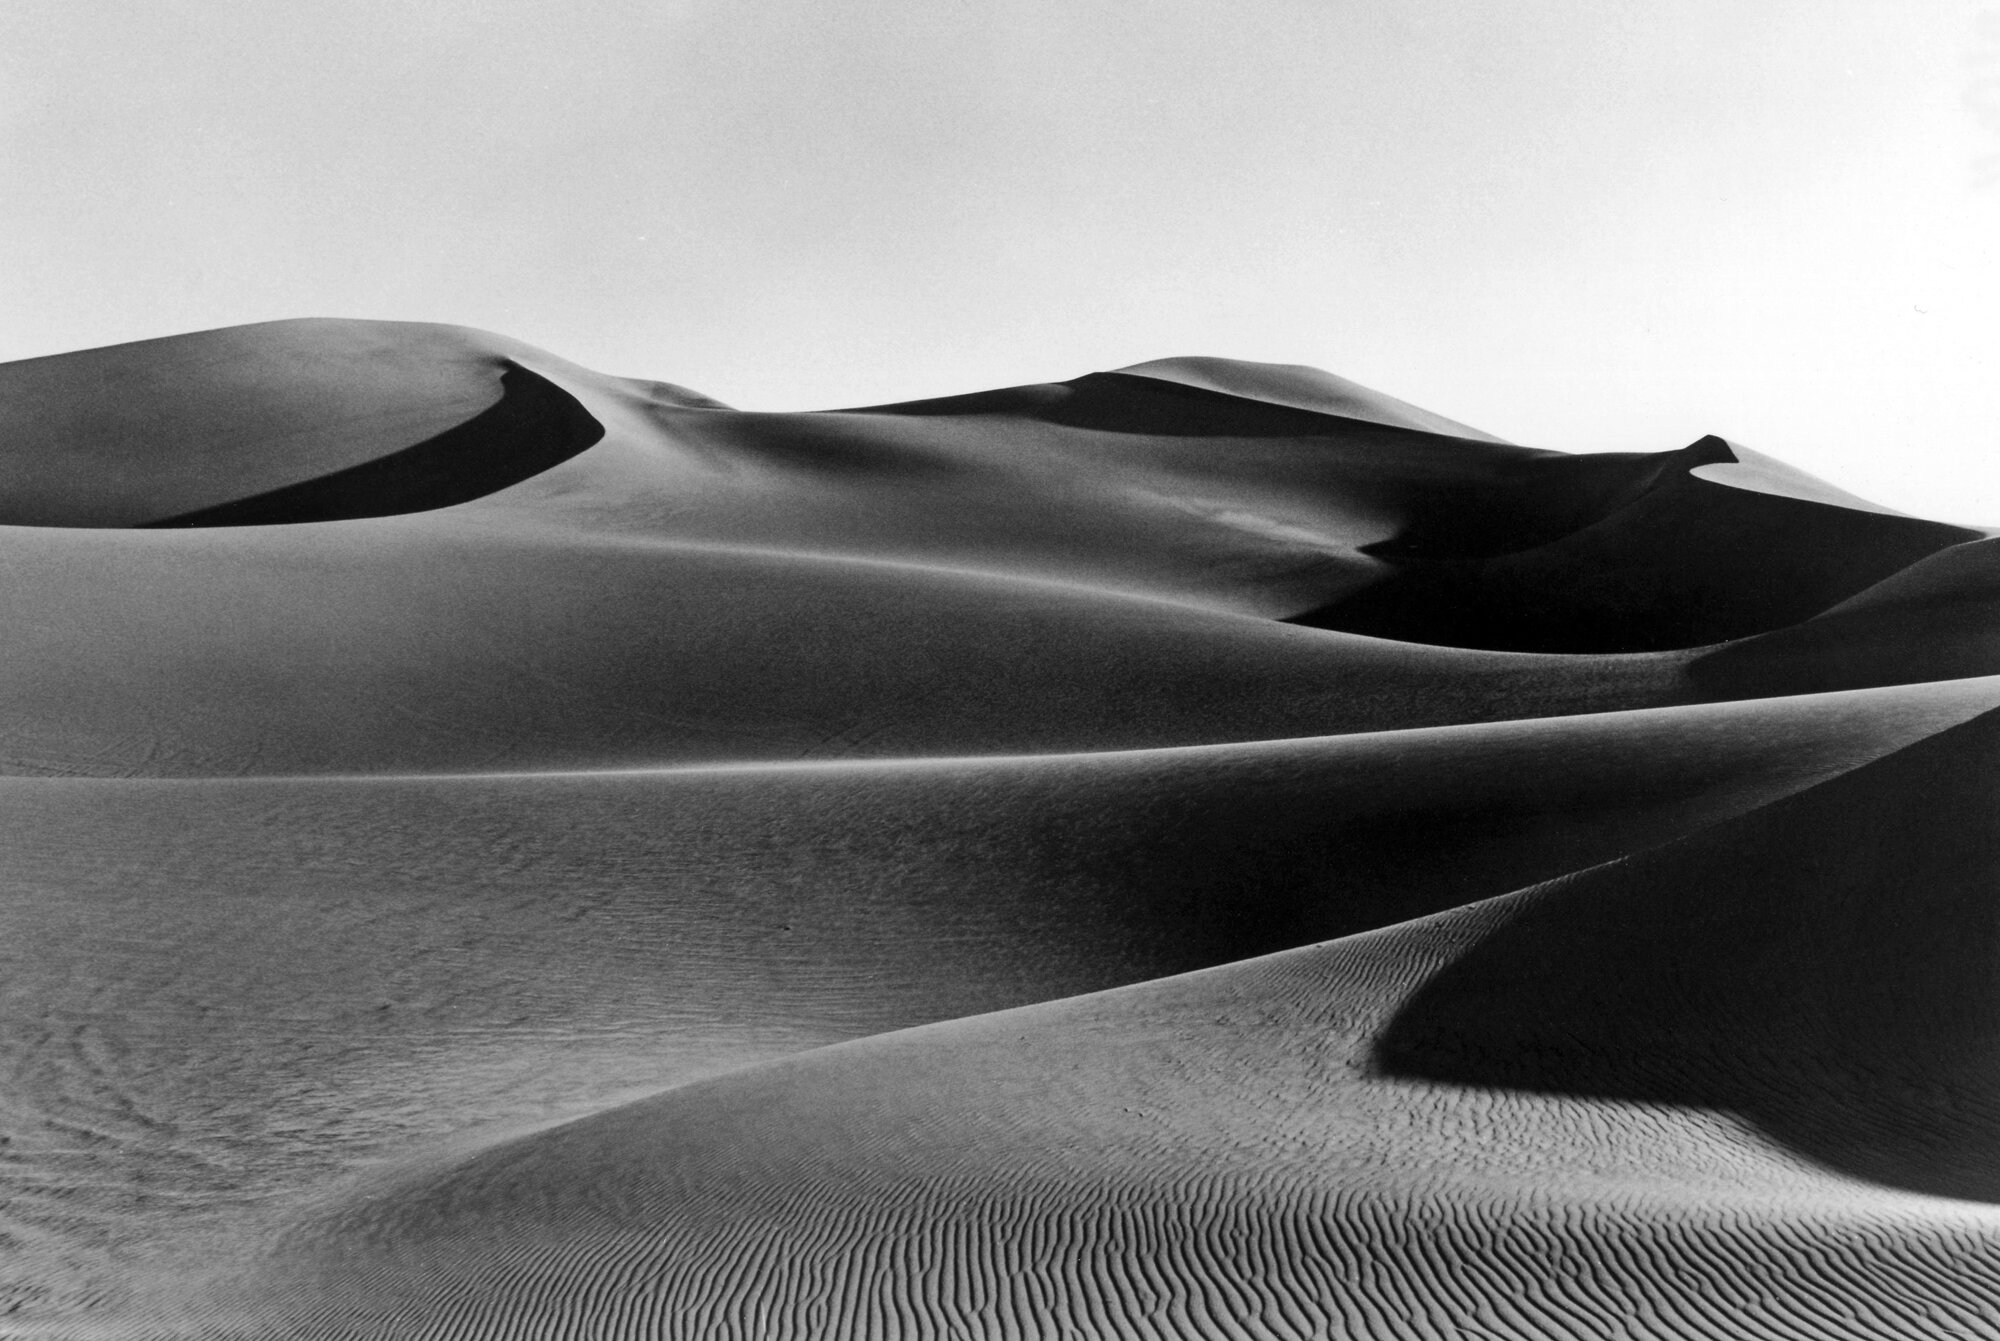  Amargosa Dunes 